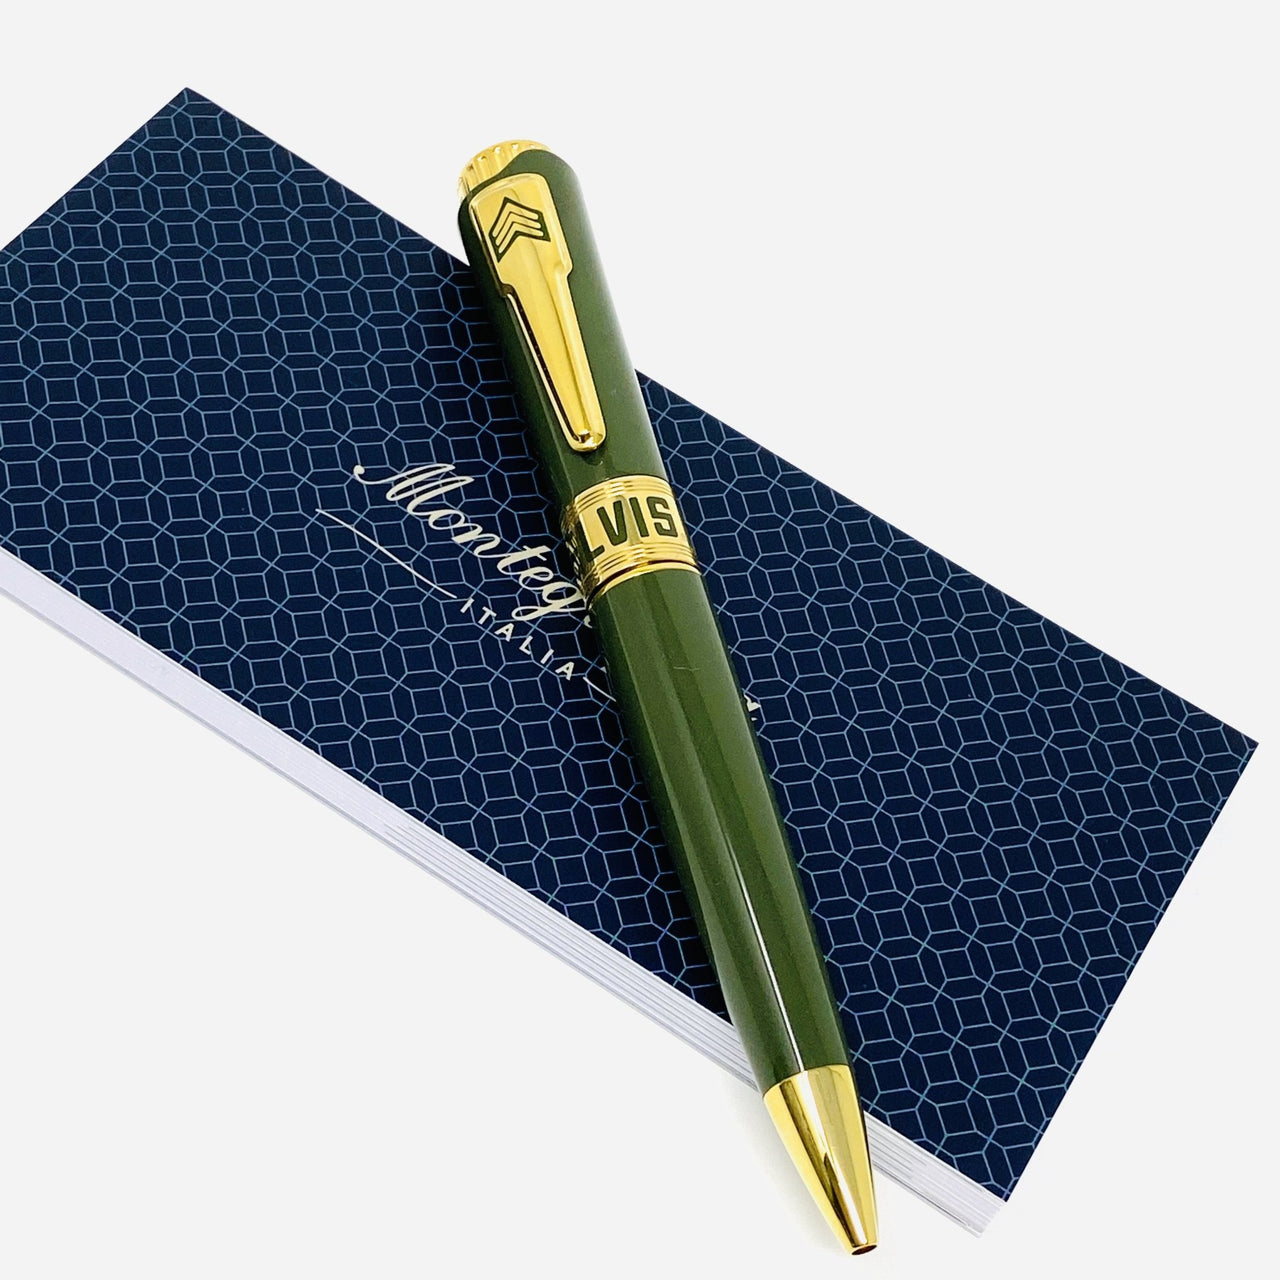 Montegrappa Pen Icons Elvis Presley Ballpoint Pen Green ISICEBYG - Watches & Crystals